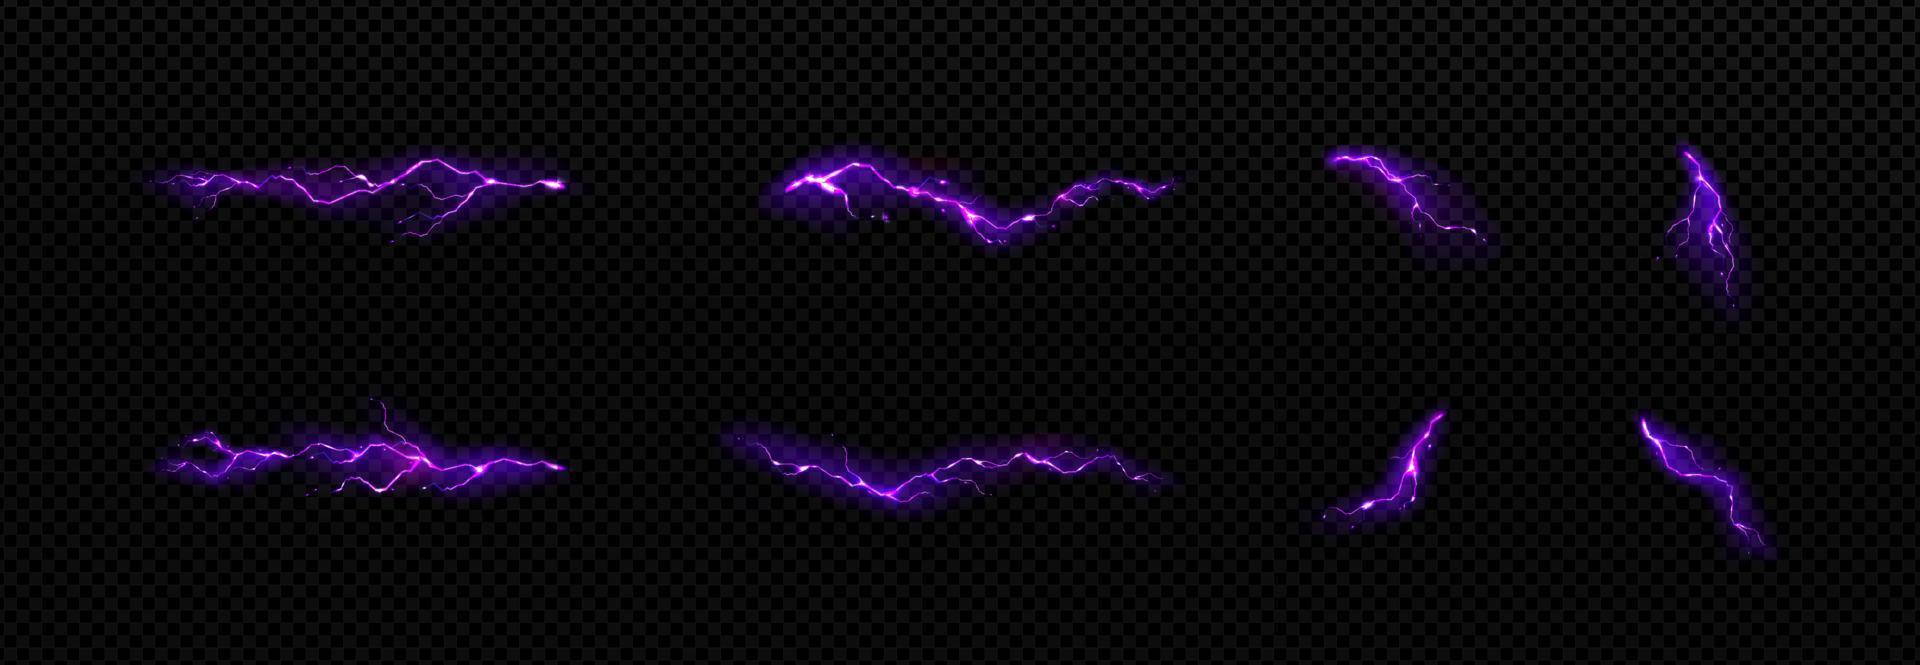 Lightning, electric purple thunderbolt strikes set vector